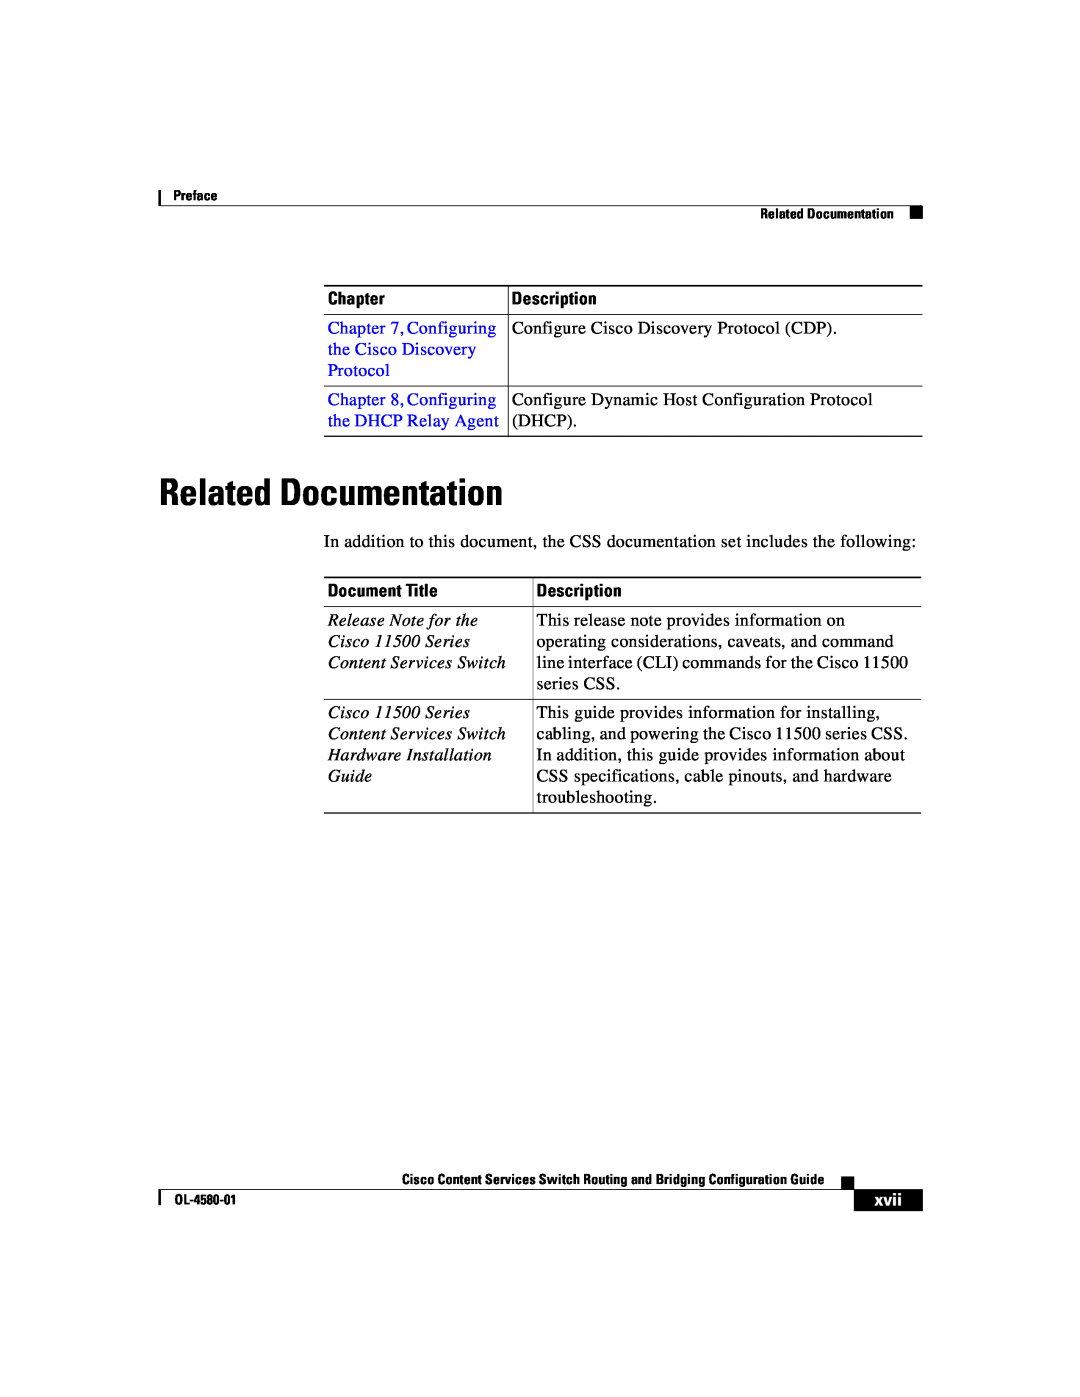 Cisco Systems OL-4580-01 Related Documentation, Chapter, Description, Configuring, Configure Cisco Discovery Protocol CDP 